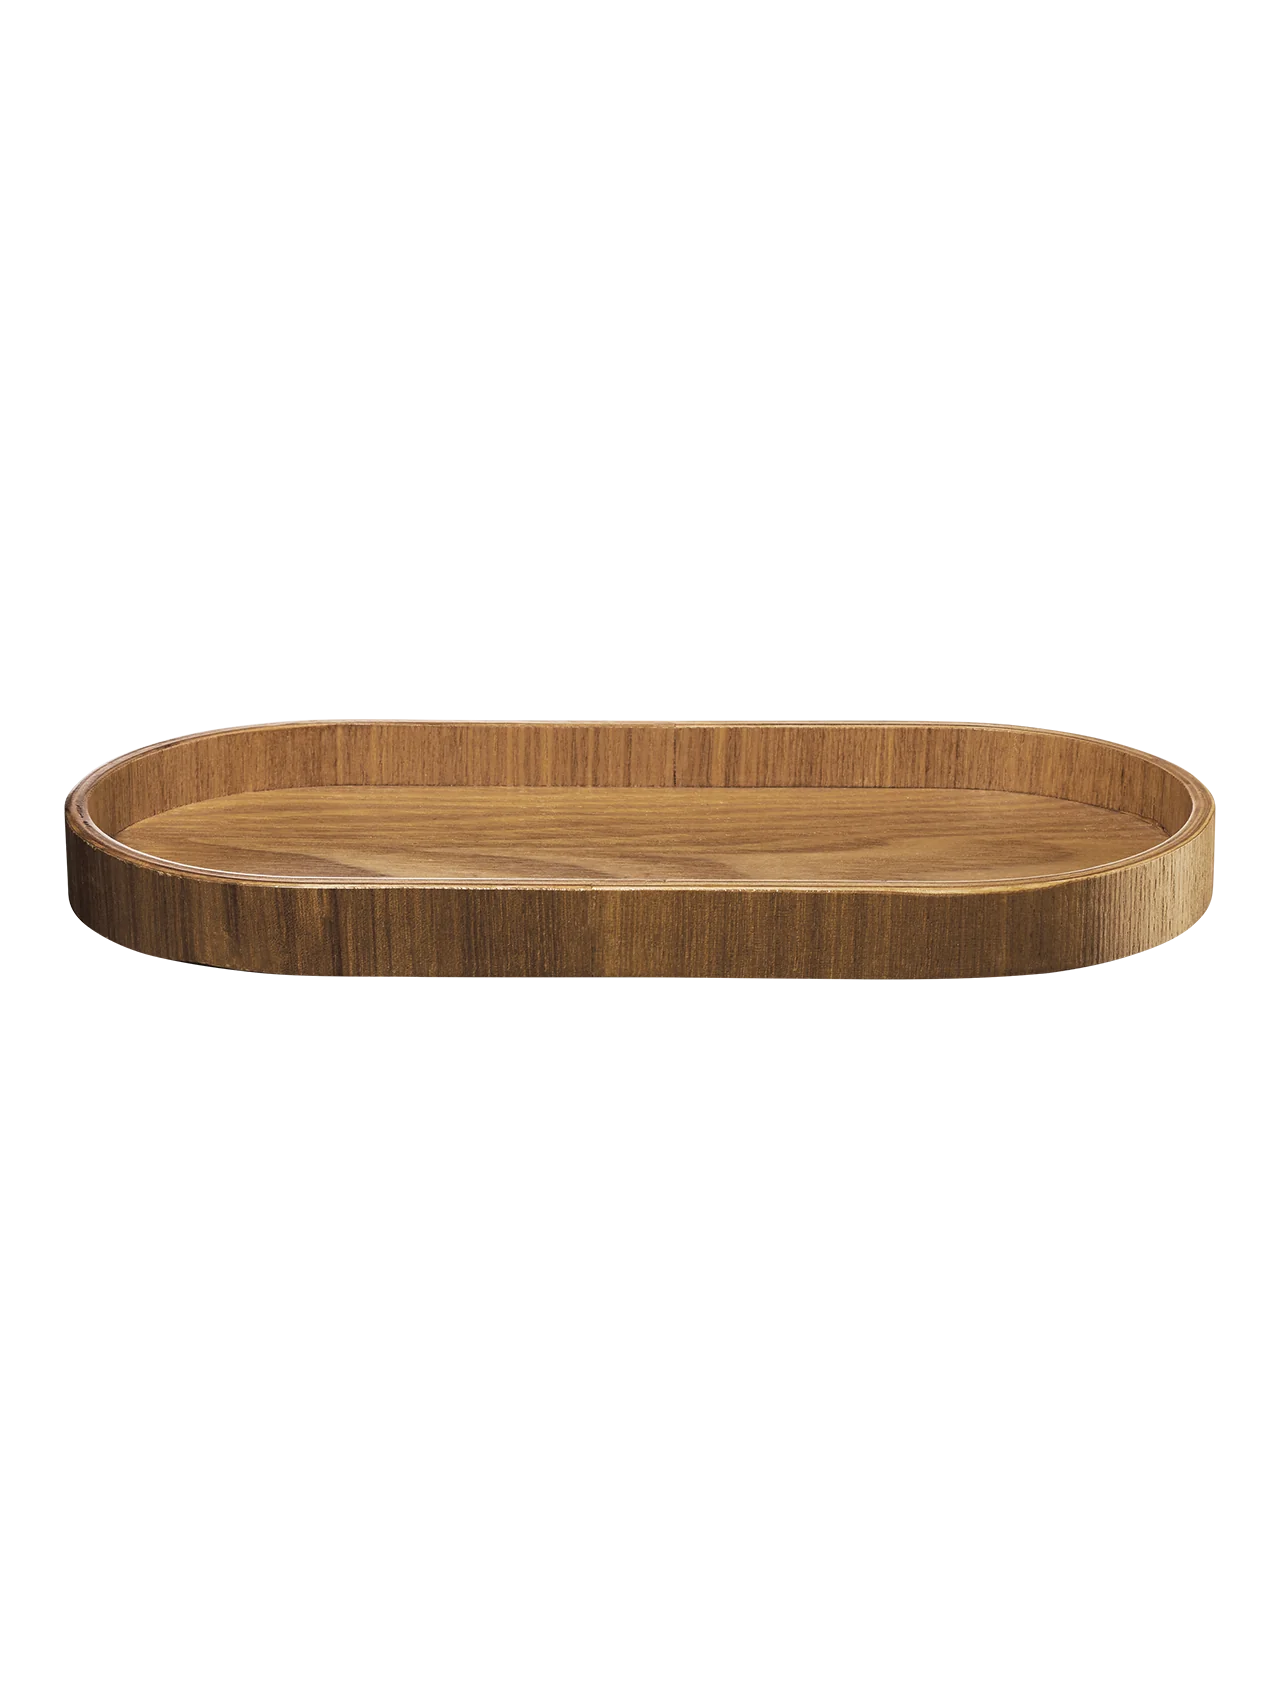 Holztablett oval 35,5 cm - ASA 